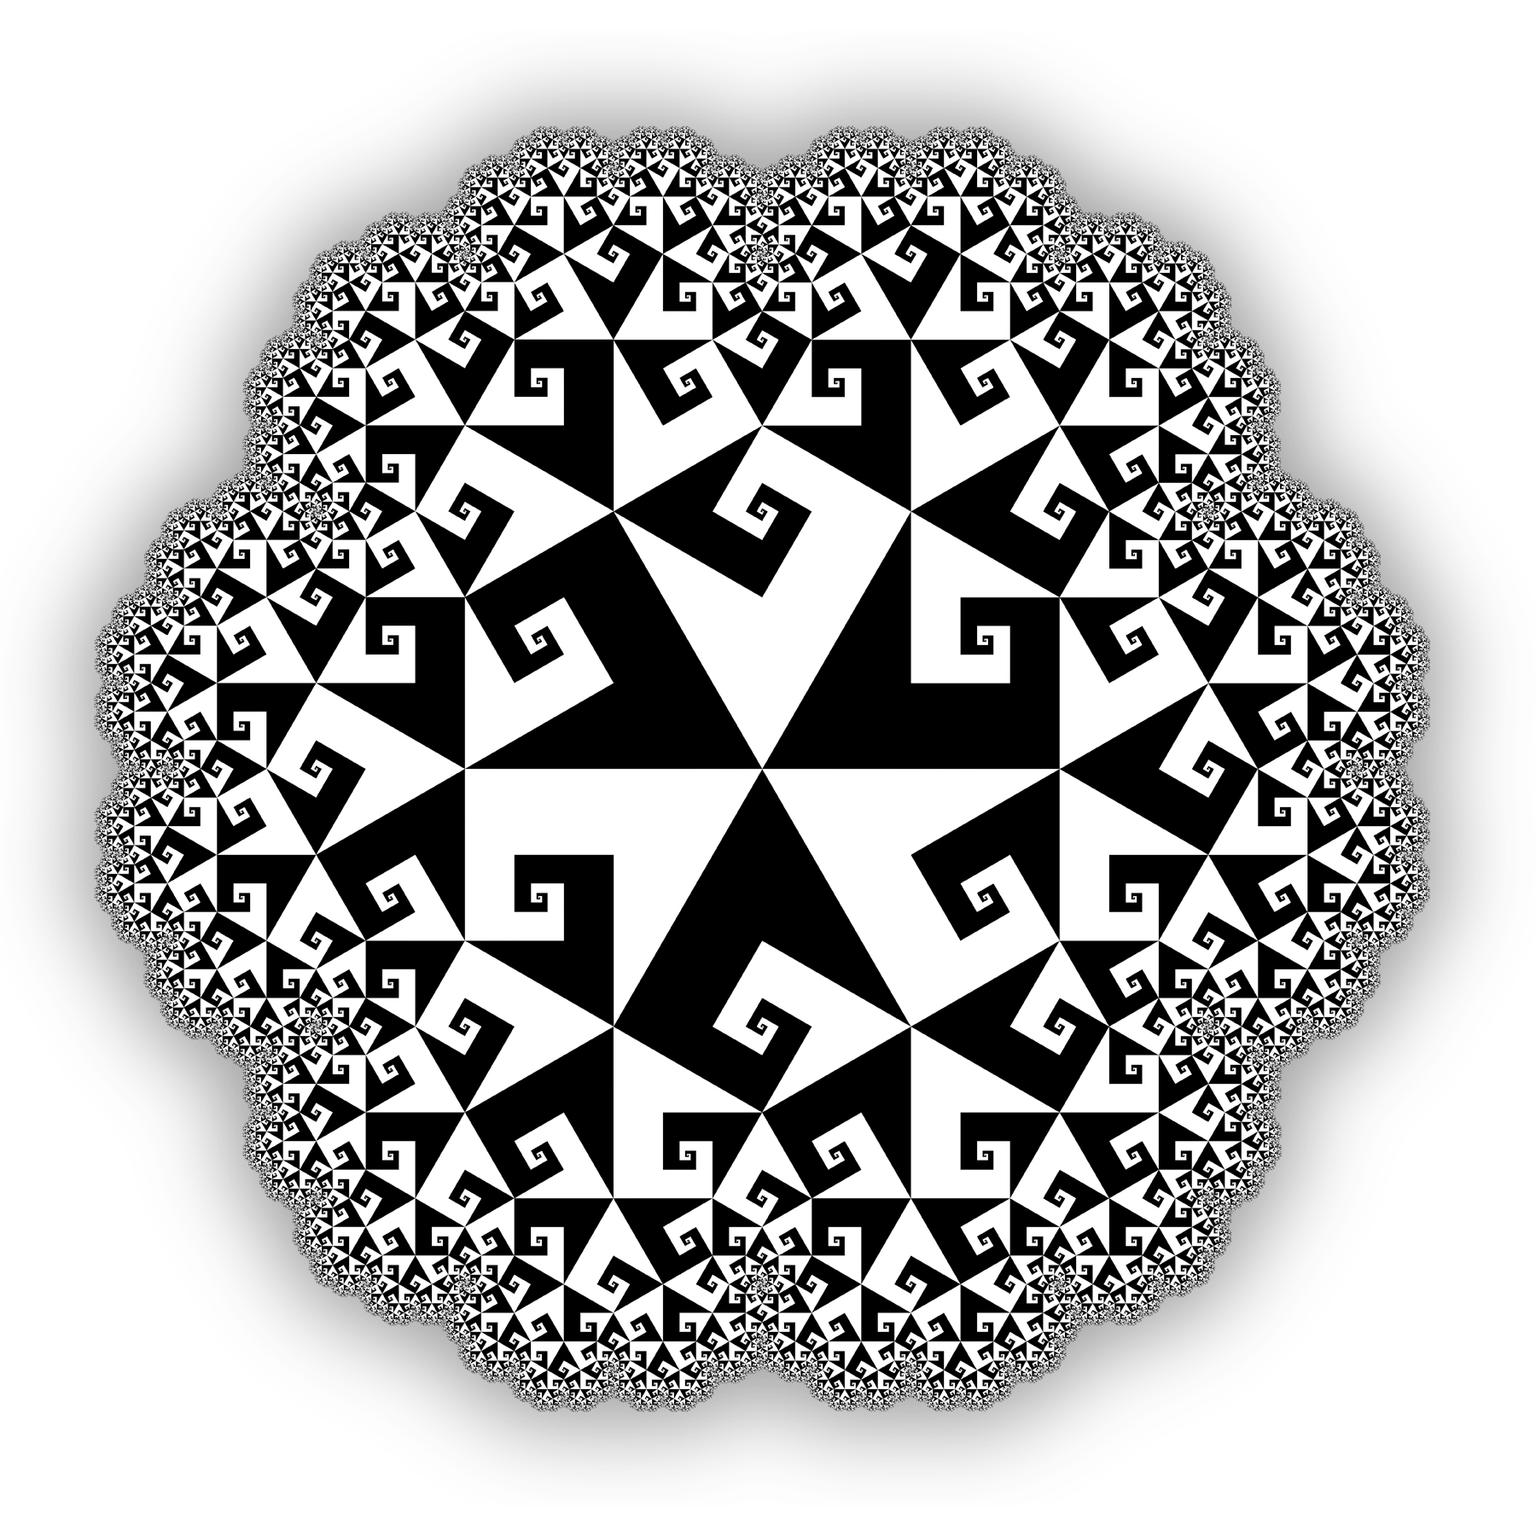 Image for entry 'Fractal Tessellation of Spirals'